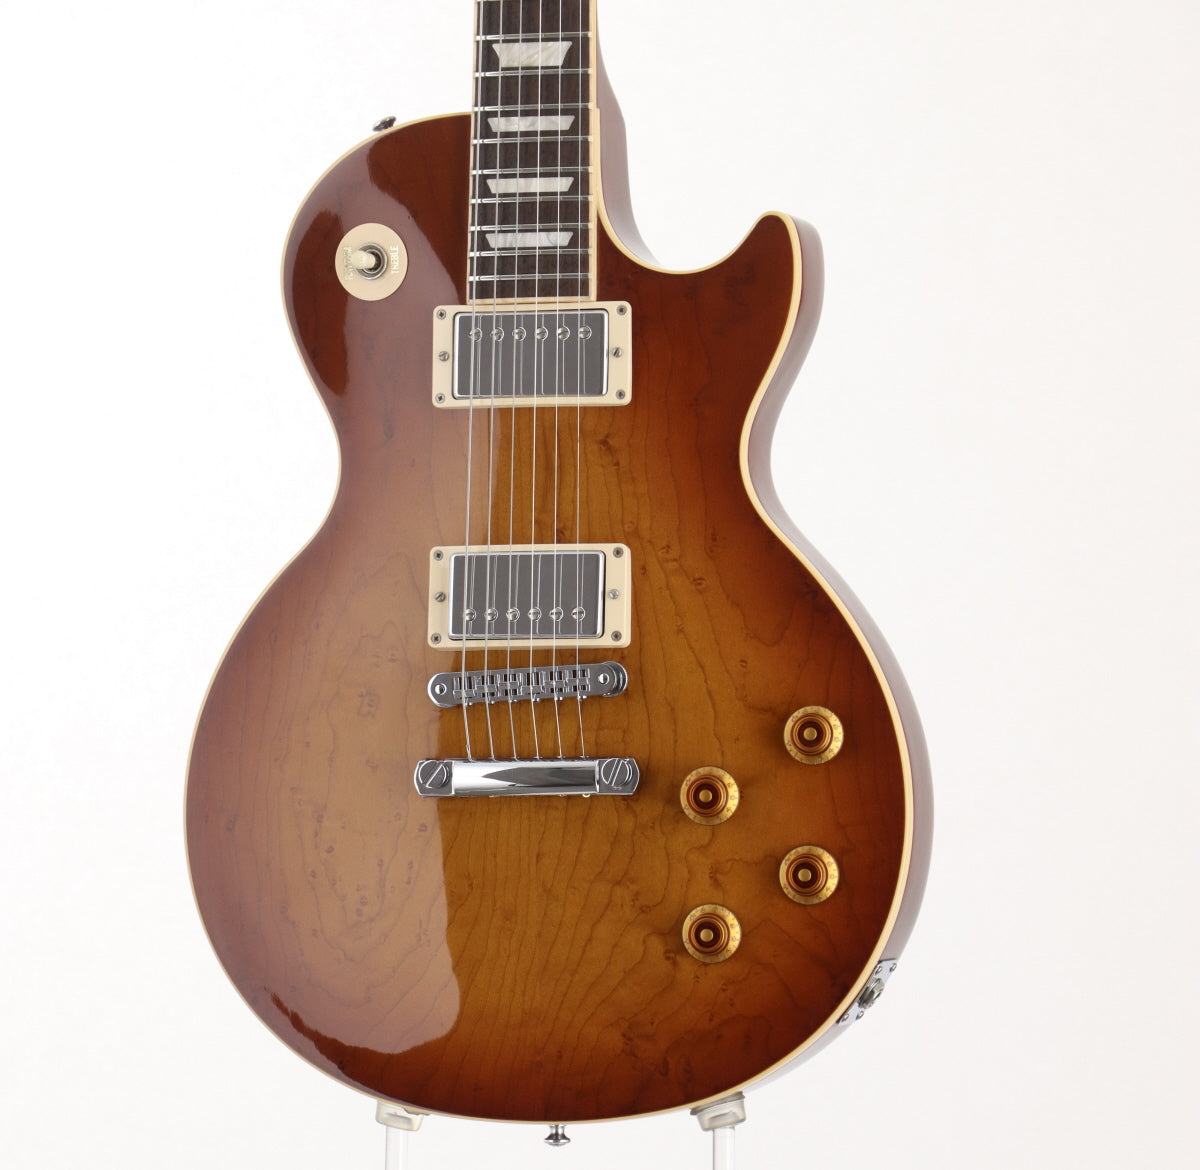 [SN 104230491] USED Gibson USA / Les Paul Standard 2013 Premium Birdseye Maple Top Tea Burst [08]